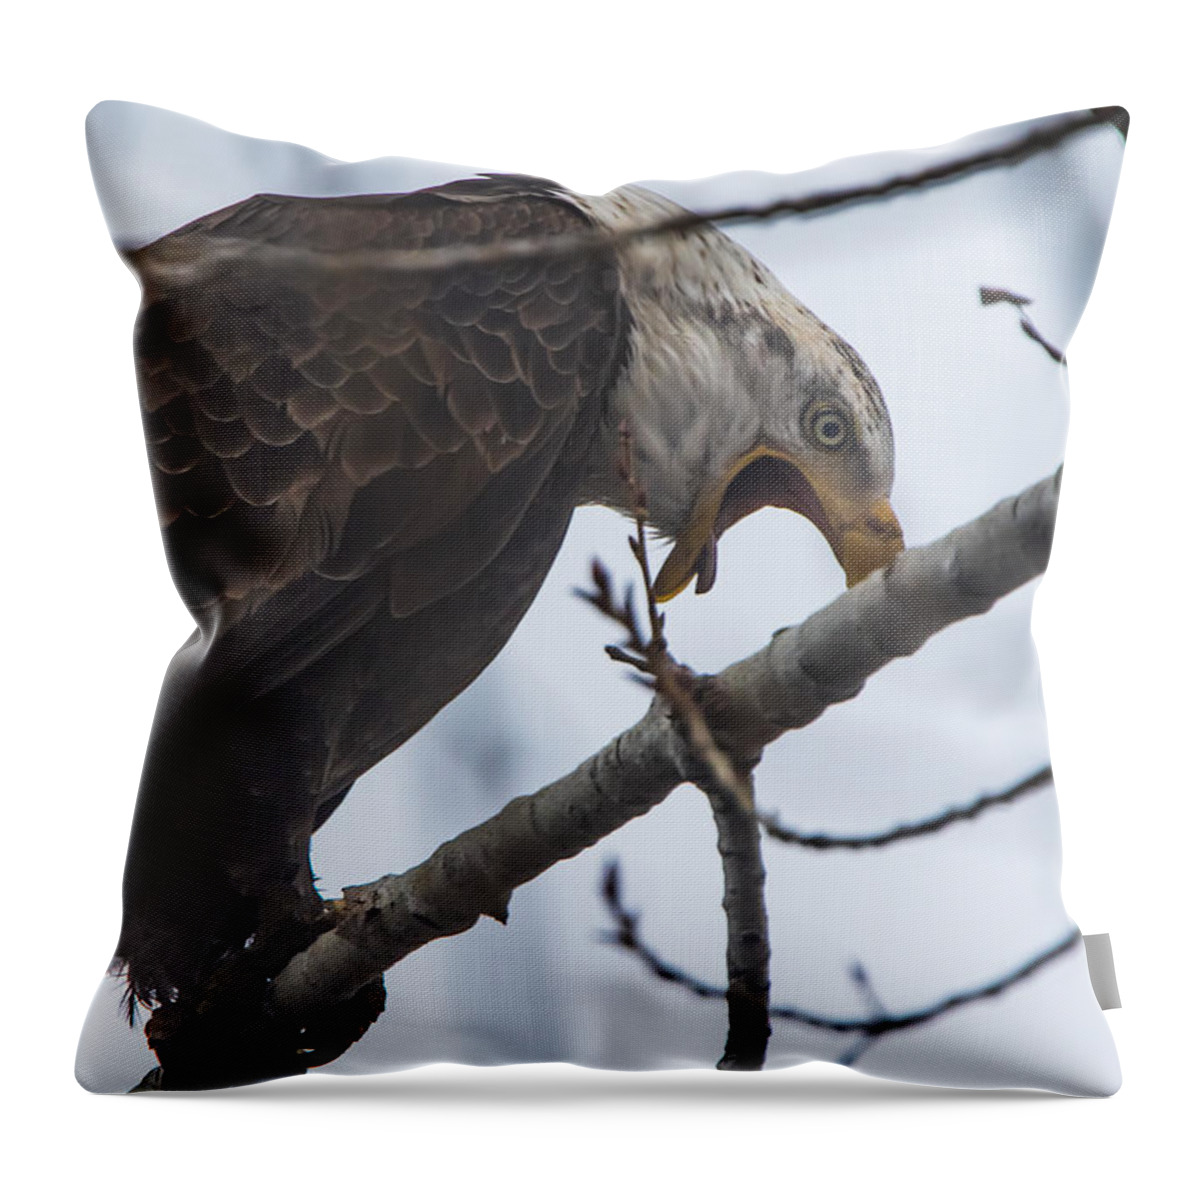 California Throw Pillow featuring the photograph Bald Eagle Upset by Marc Crumpler